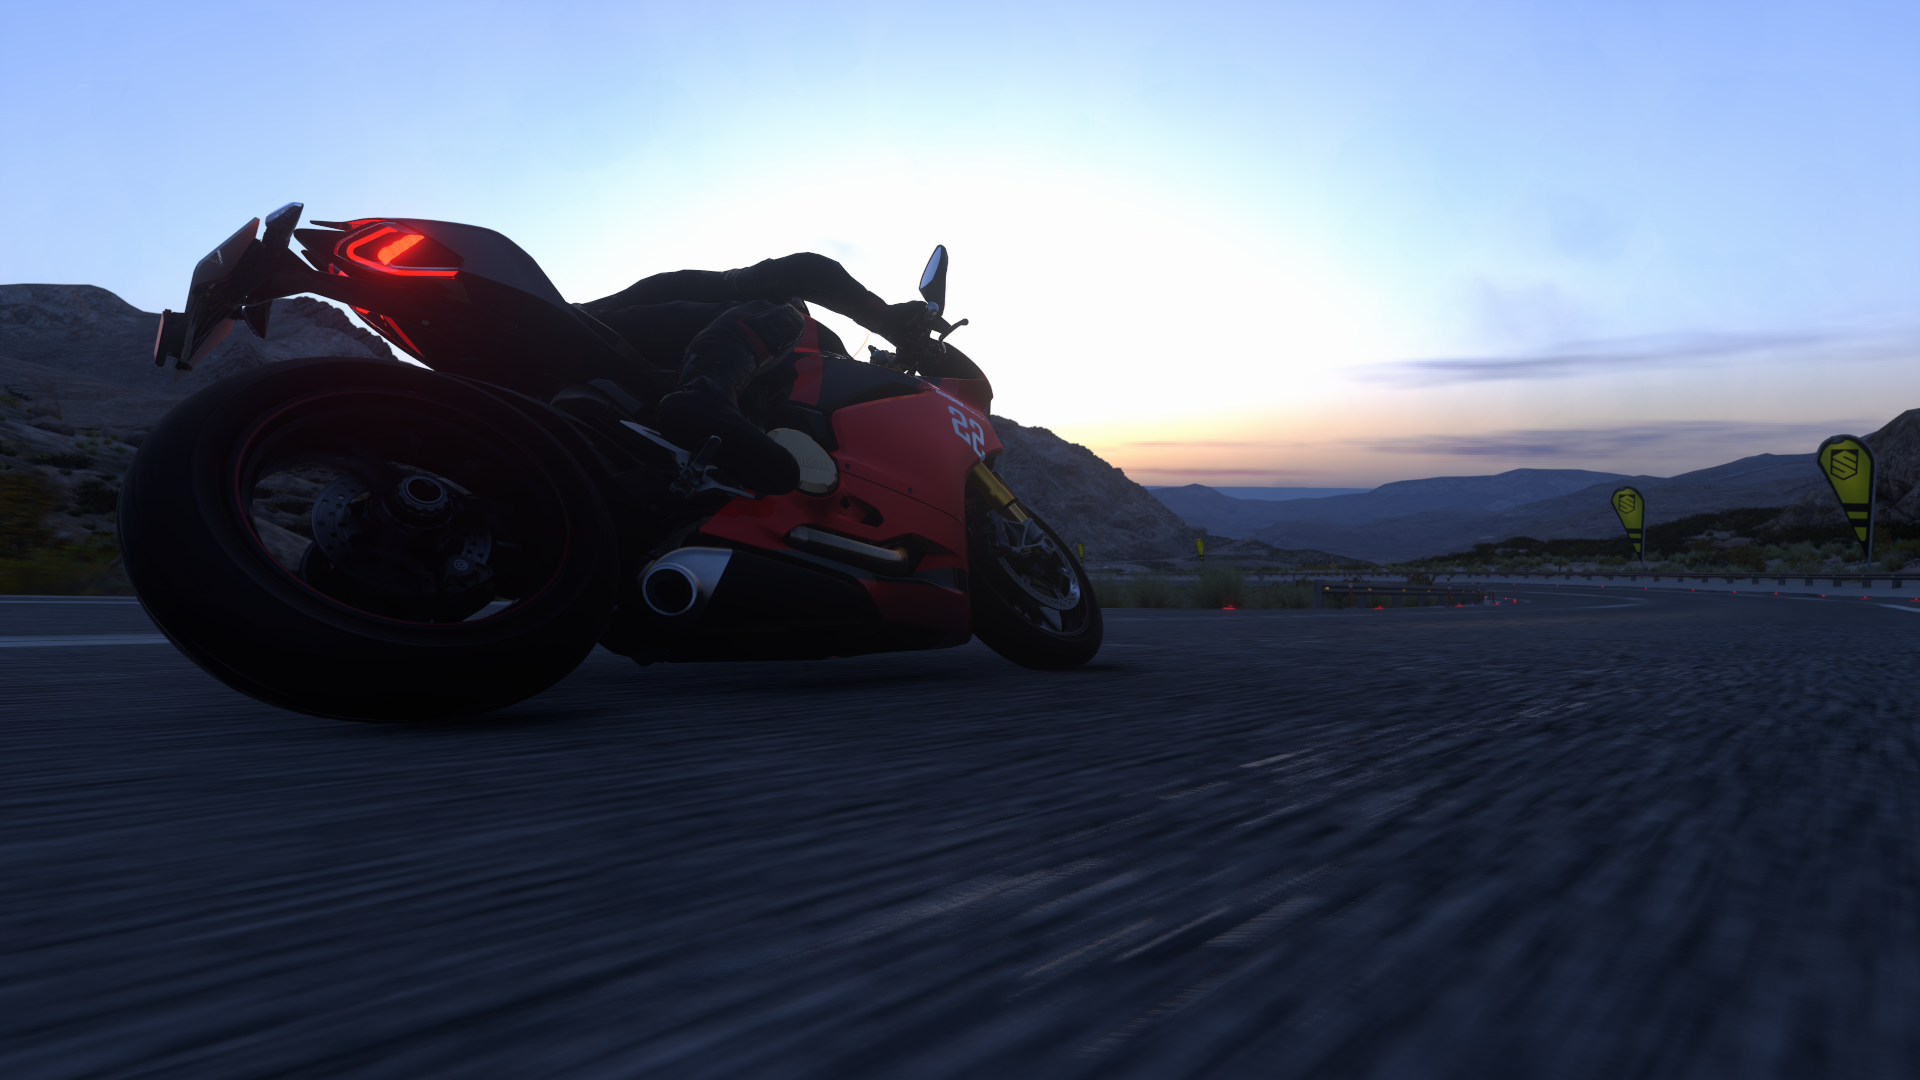 General 1920x1080 motorcycle asphalt sunset